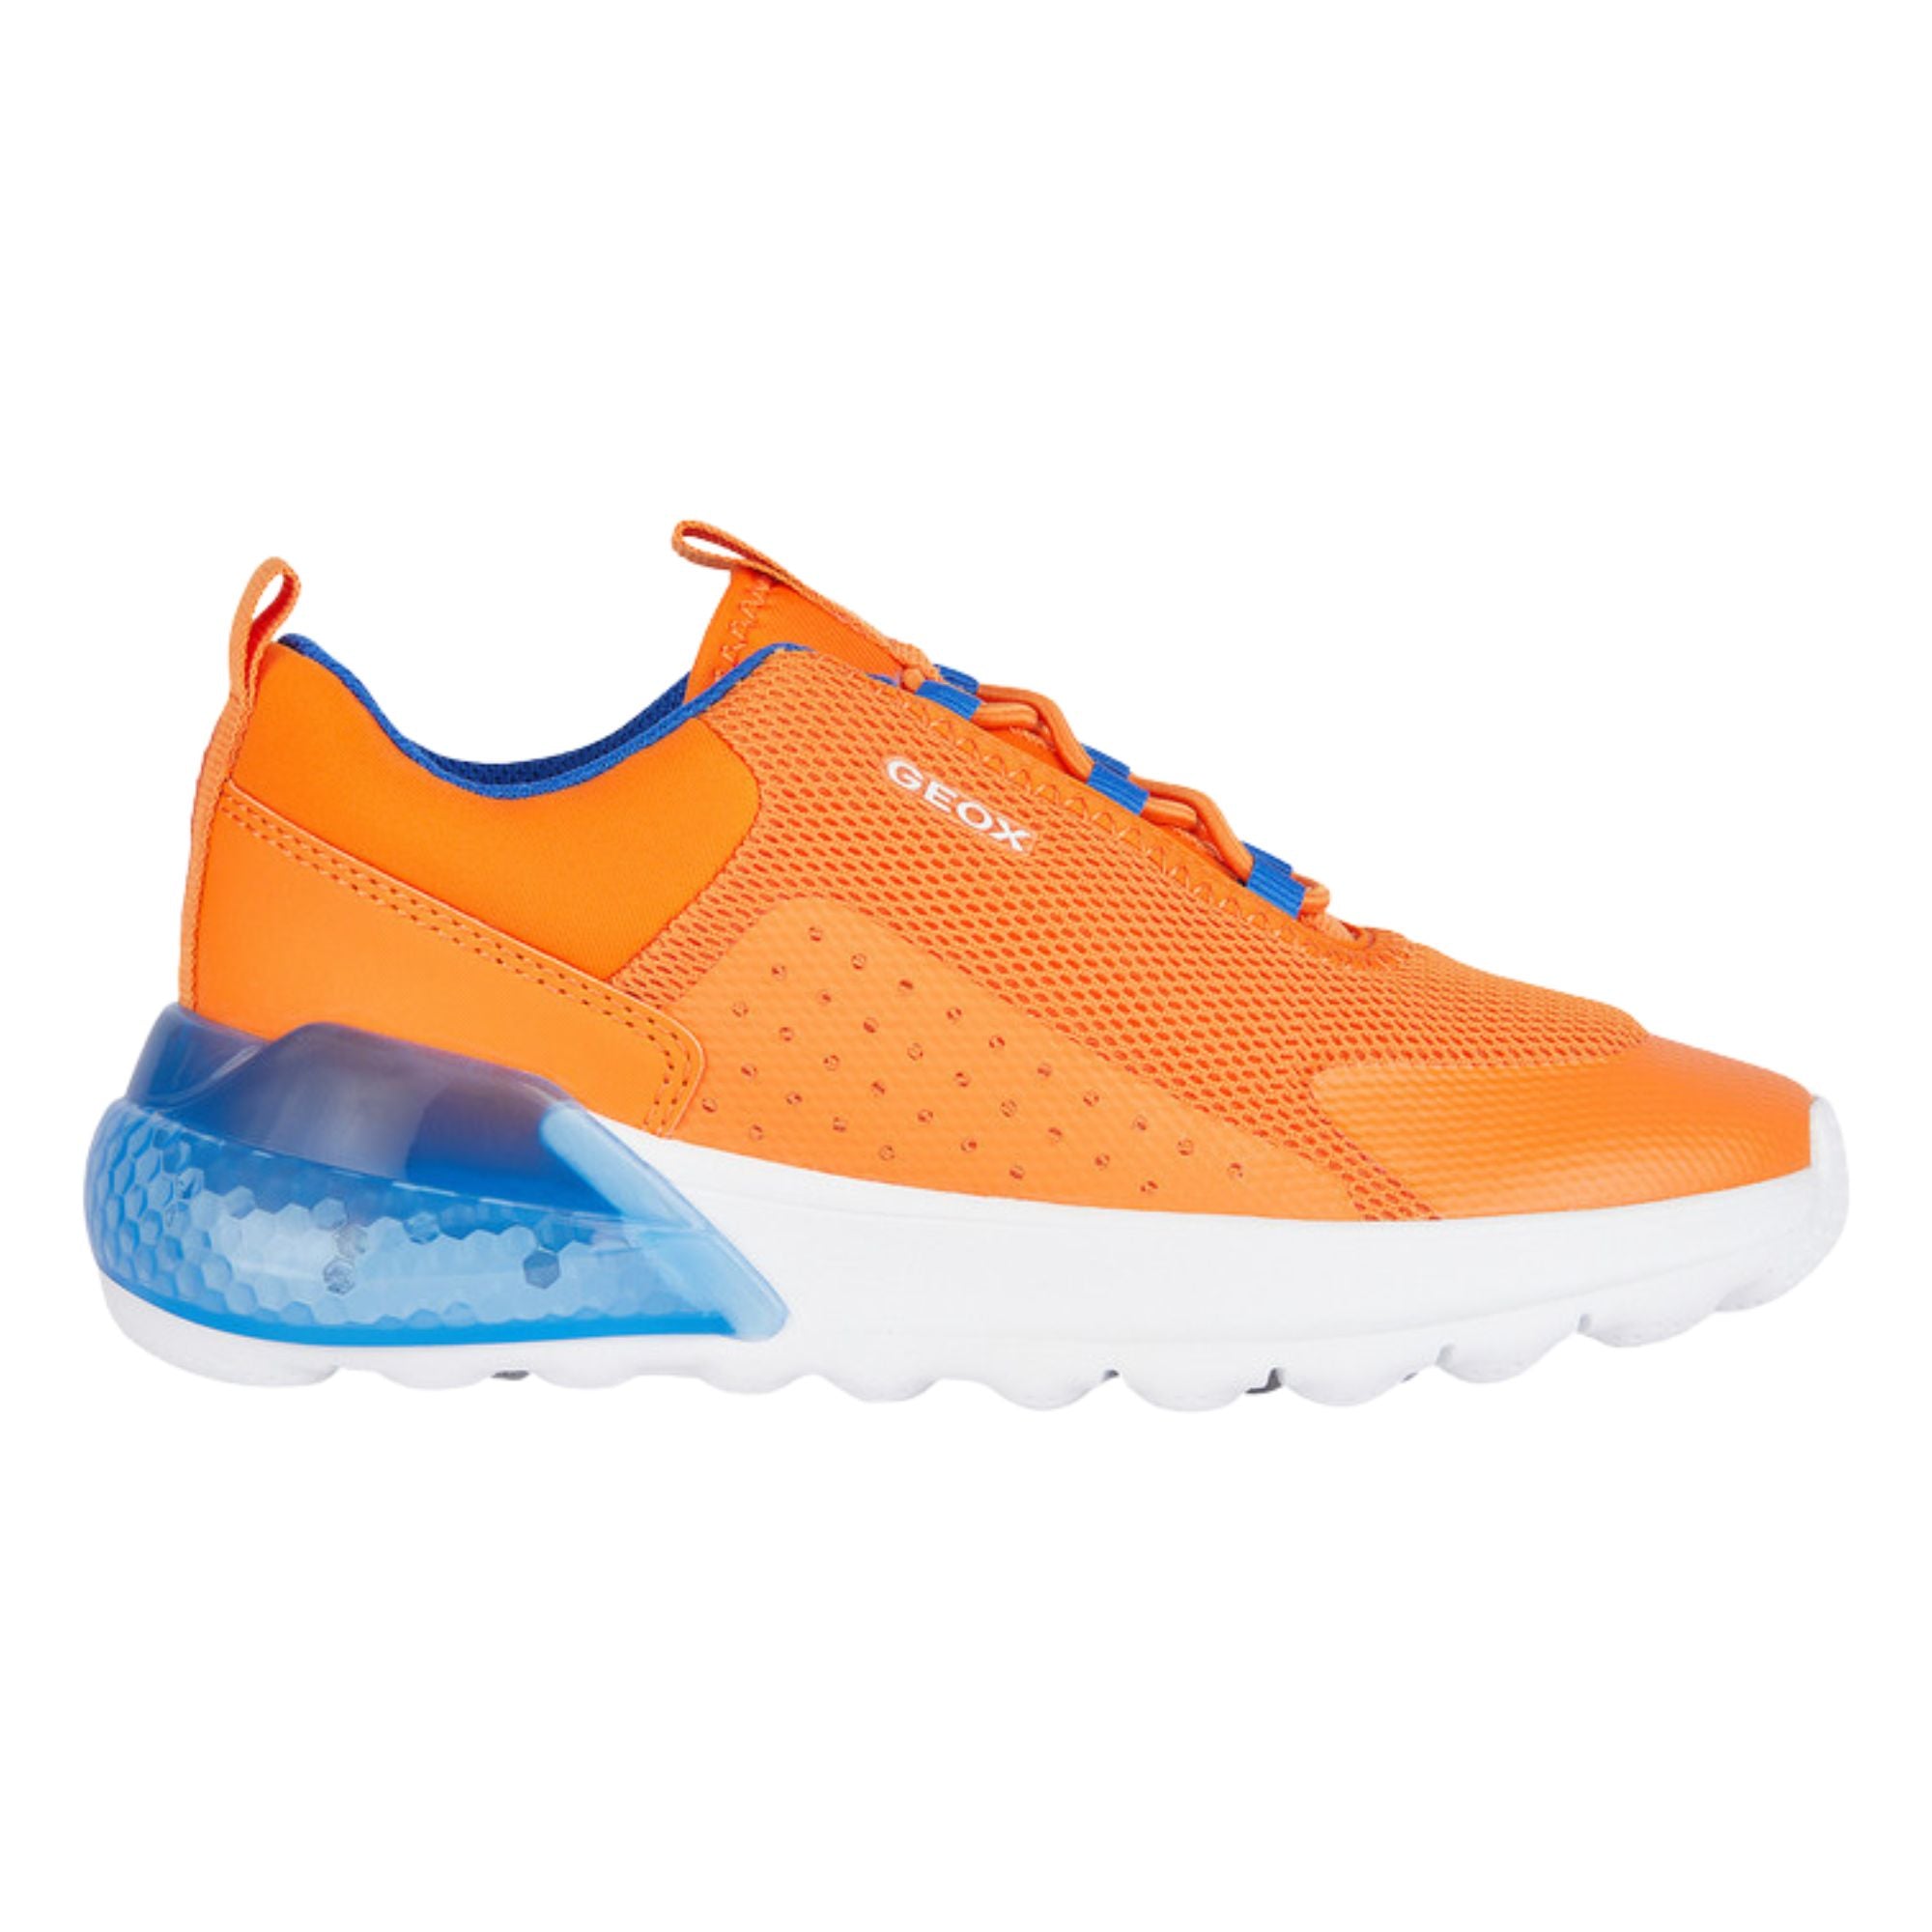 Geox Activart Illuminus Orange Sneakers